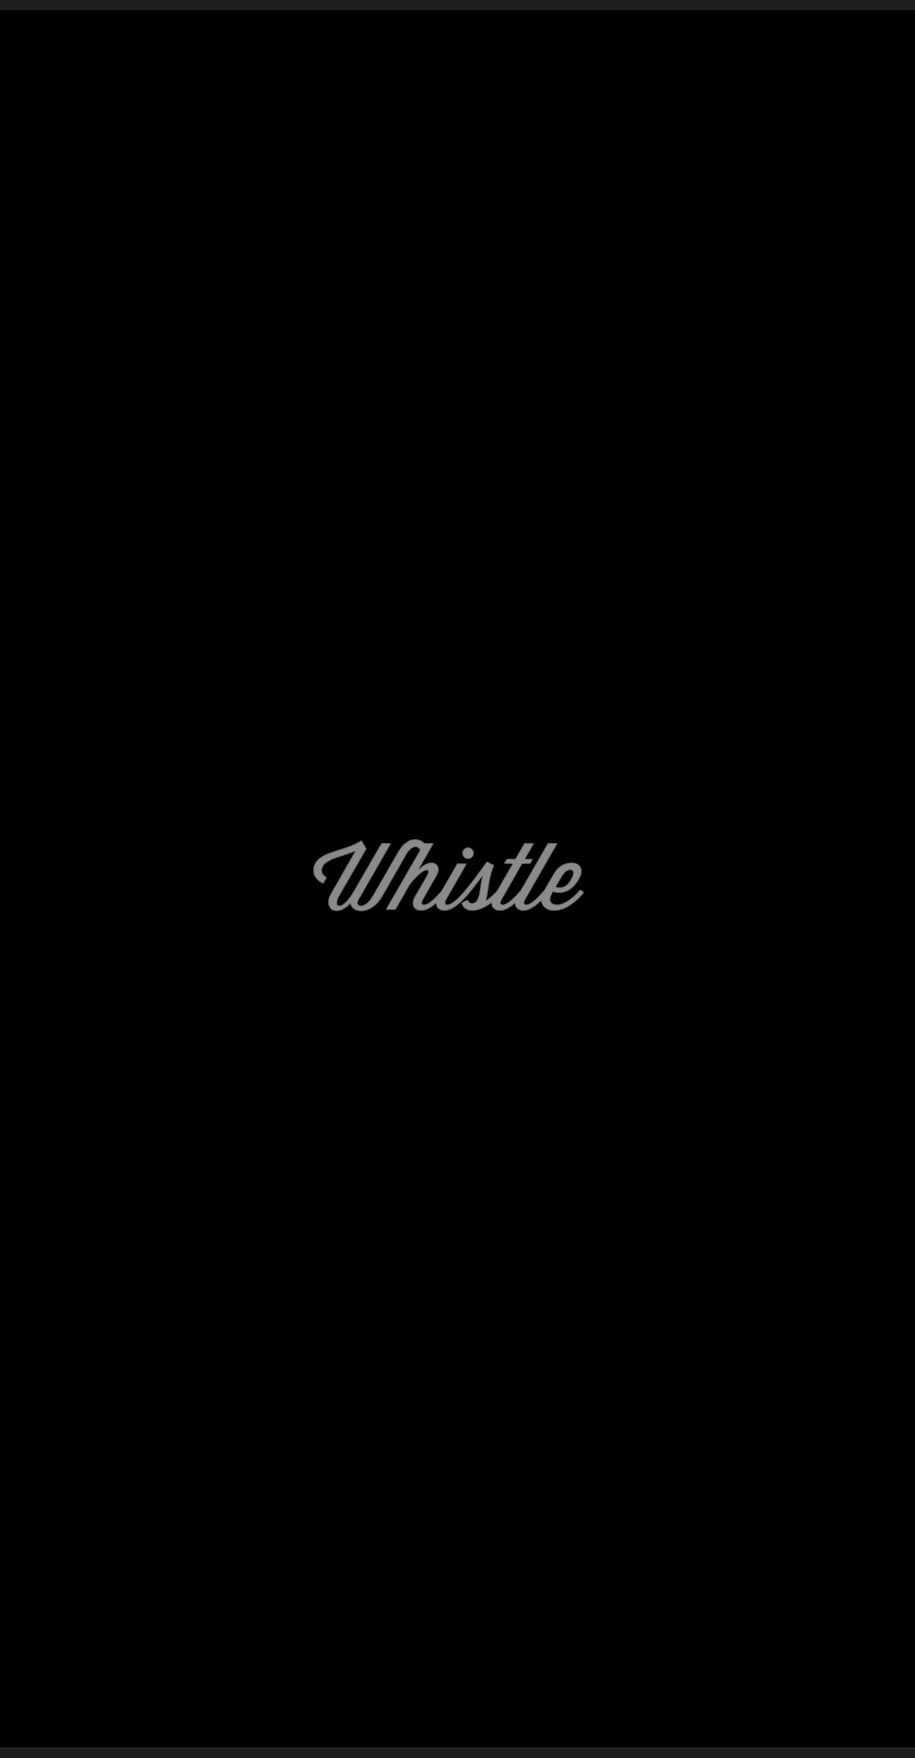 Whistle film